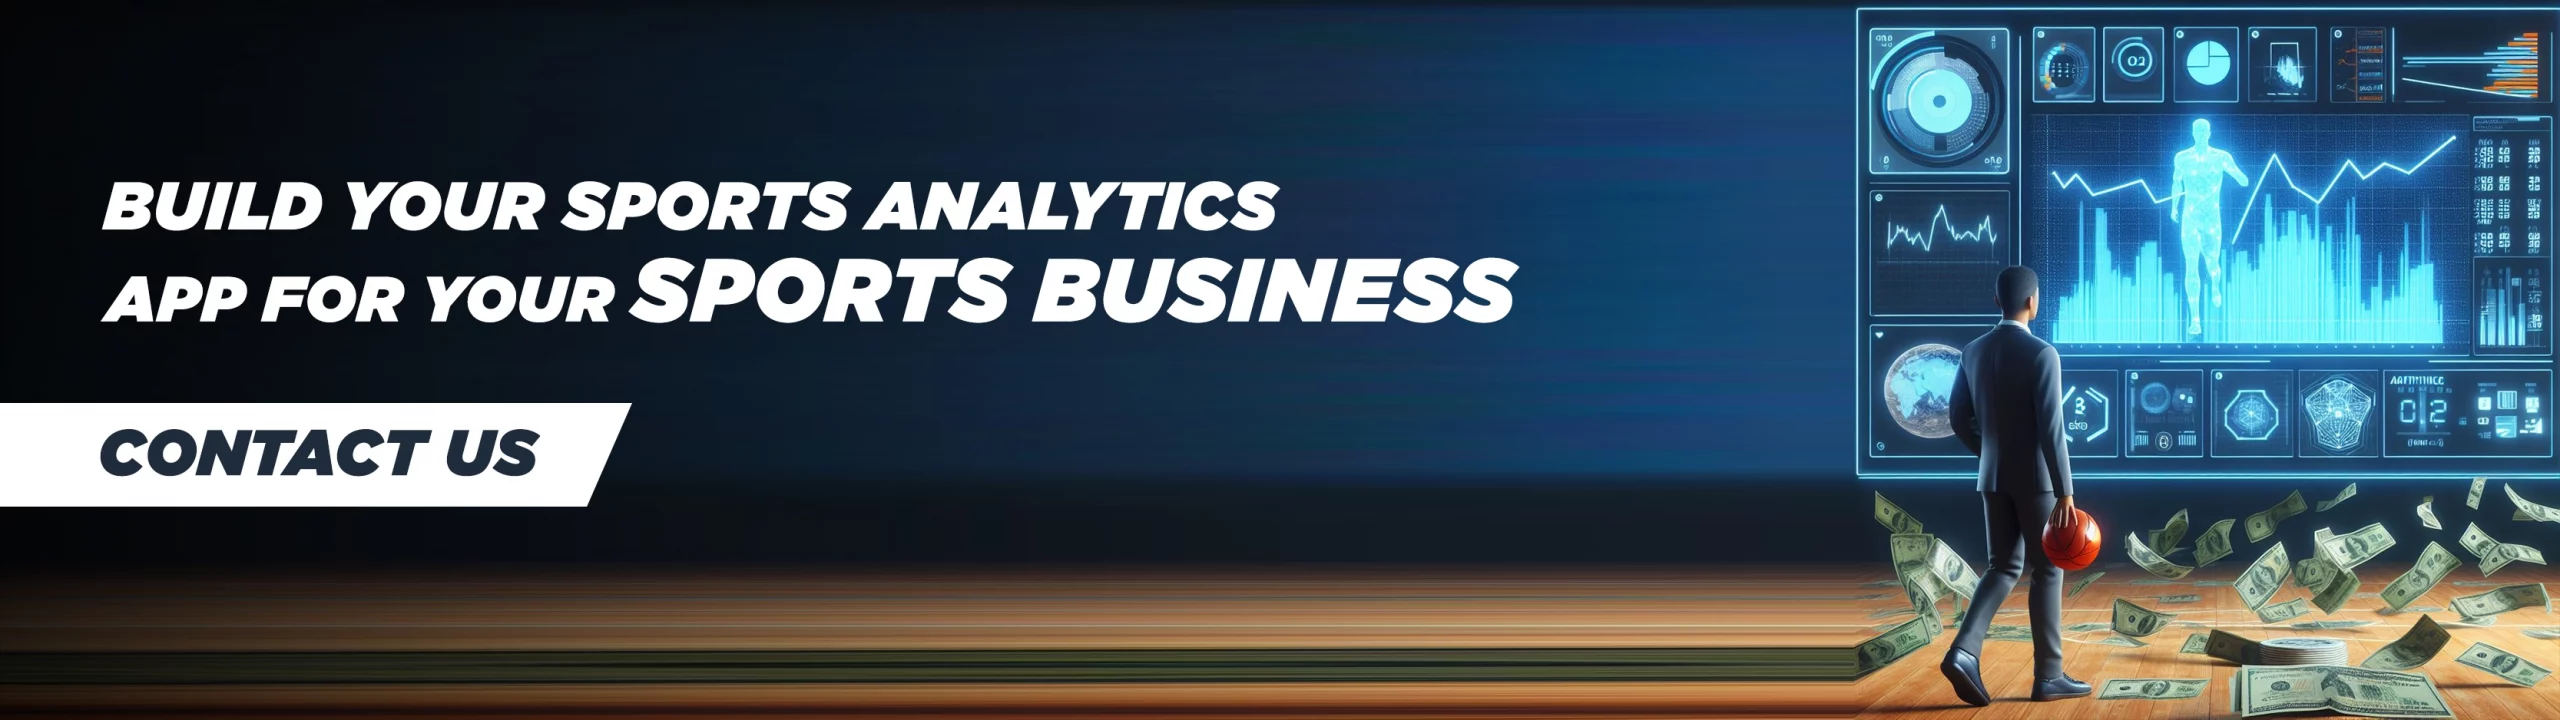 Build your sports analytics